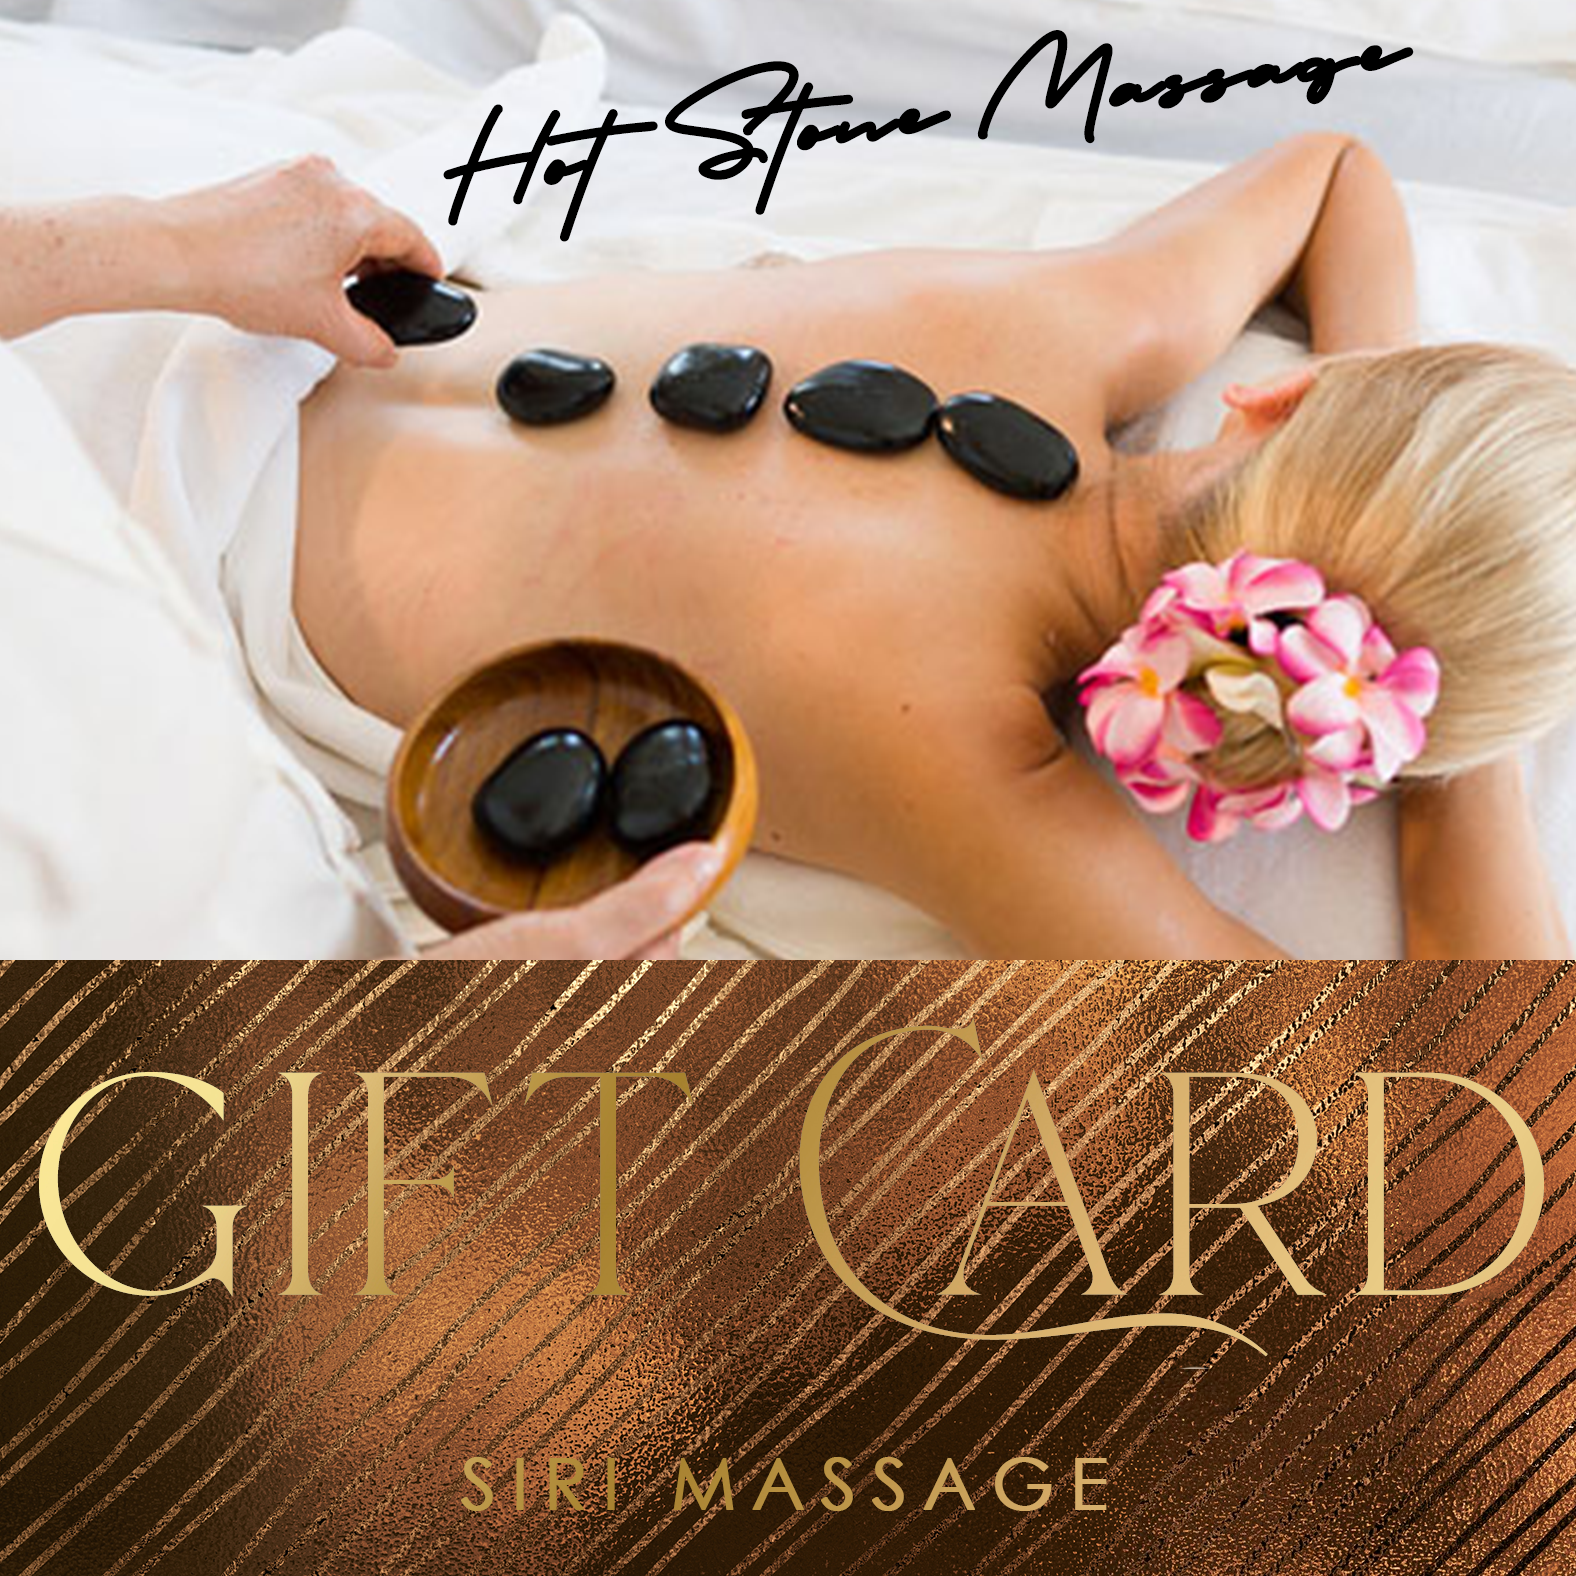 Hot Stones Massage (Gift Card)